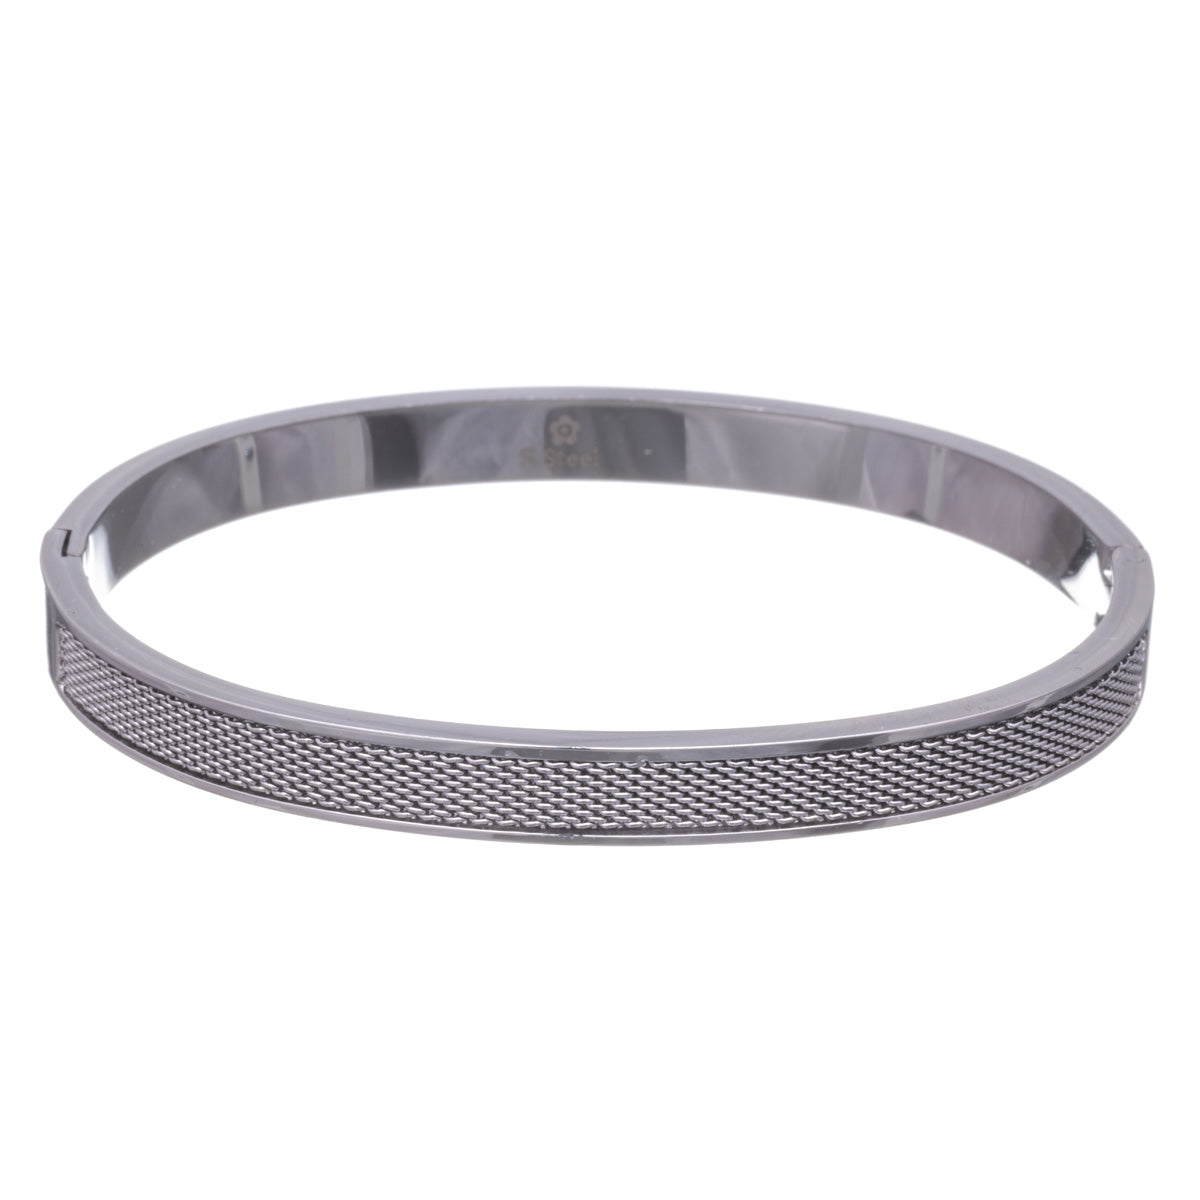 Textured steel bracelet with hinge